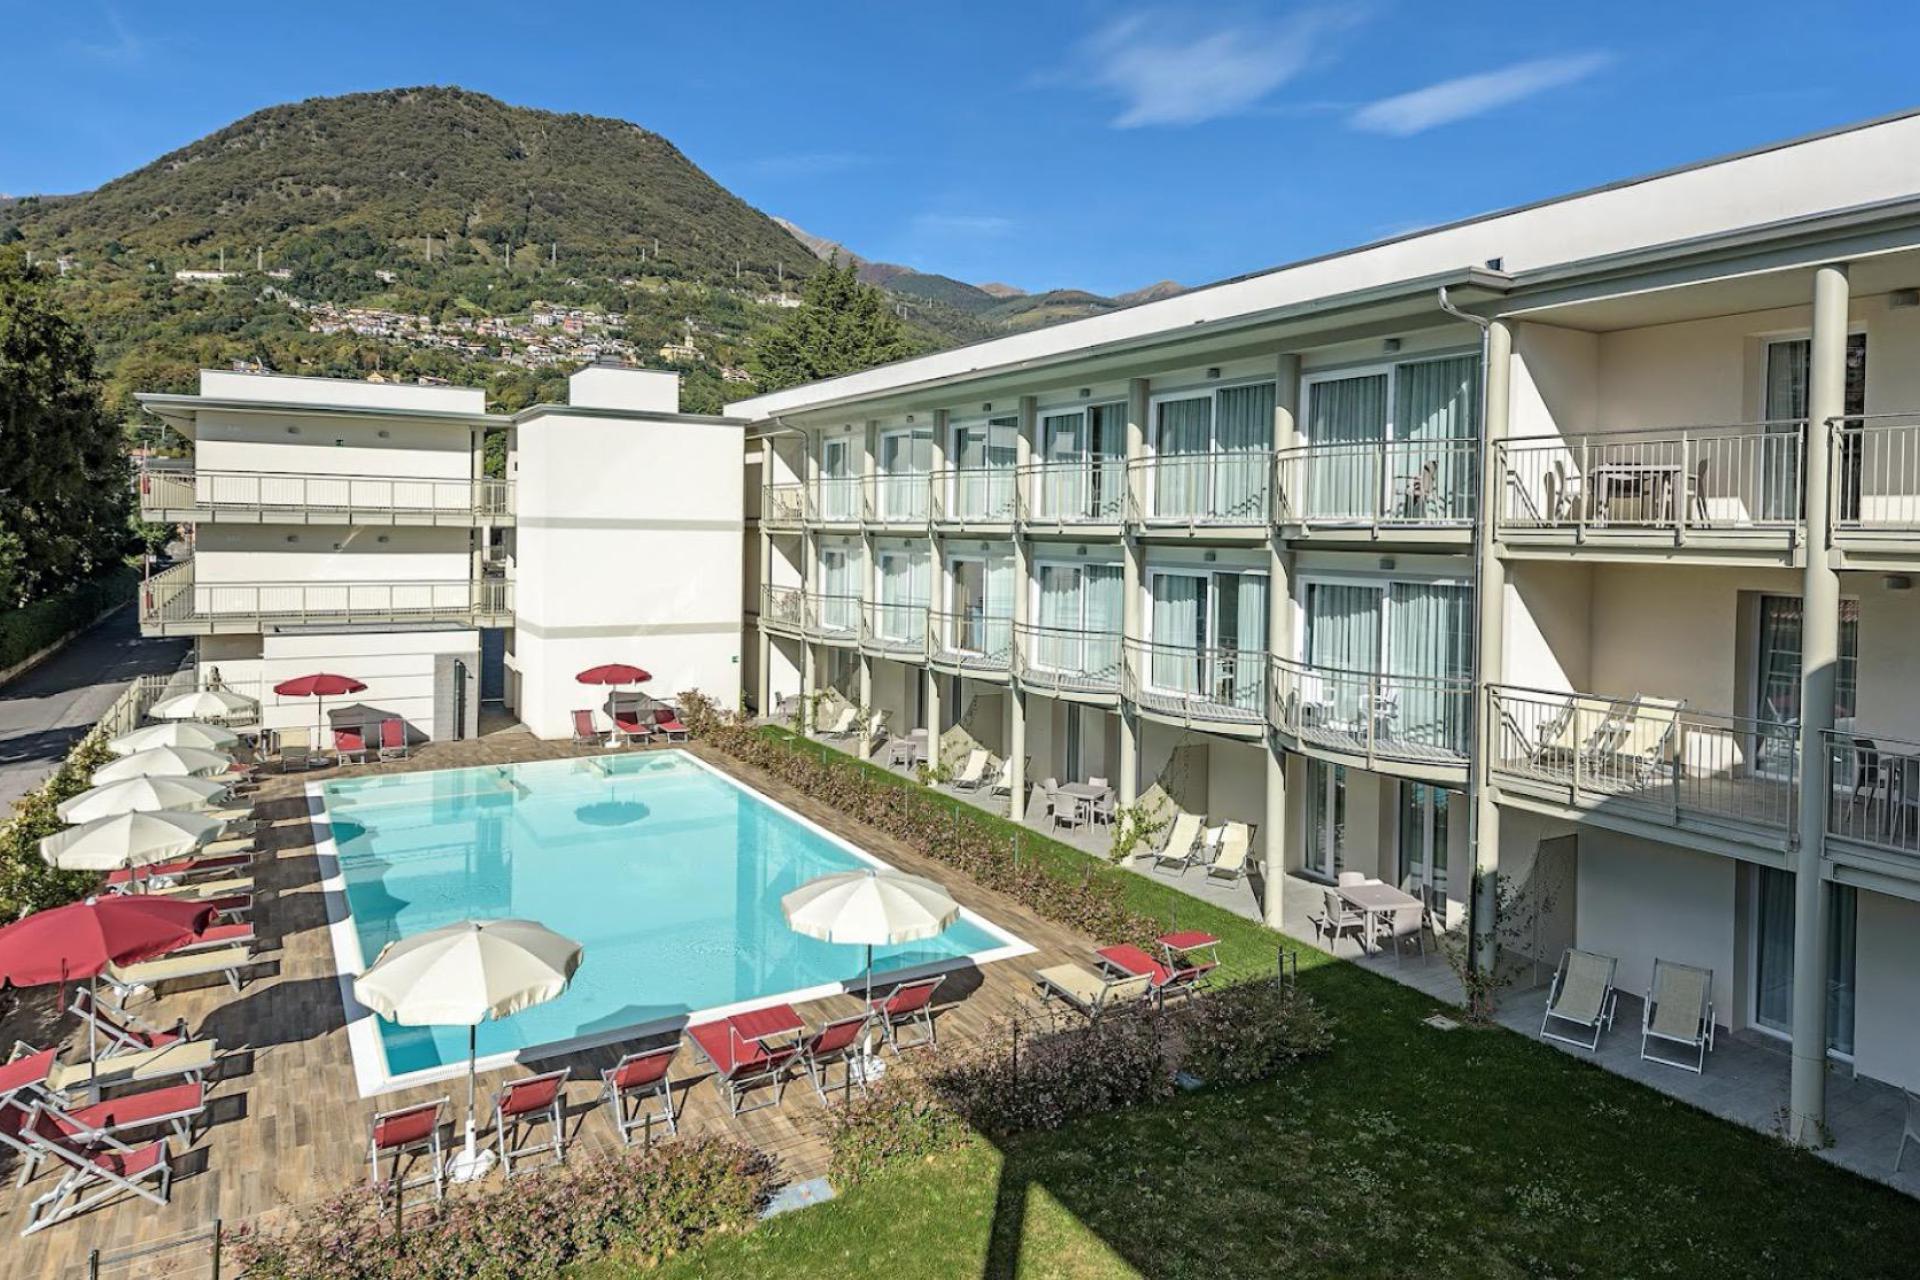 Modern Hotel 100 meters from Lake Como